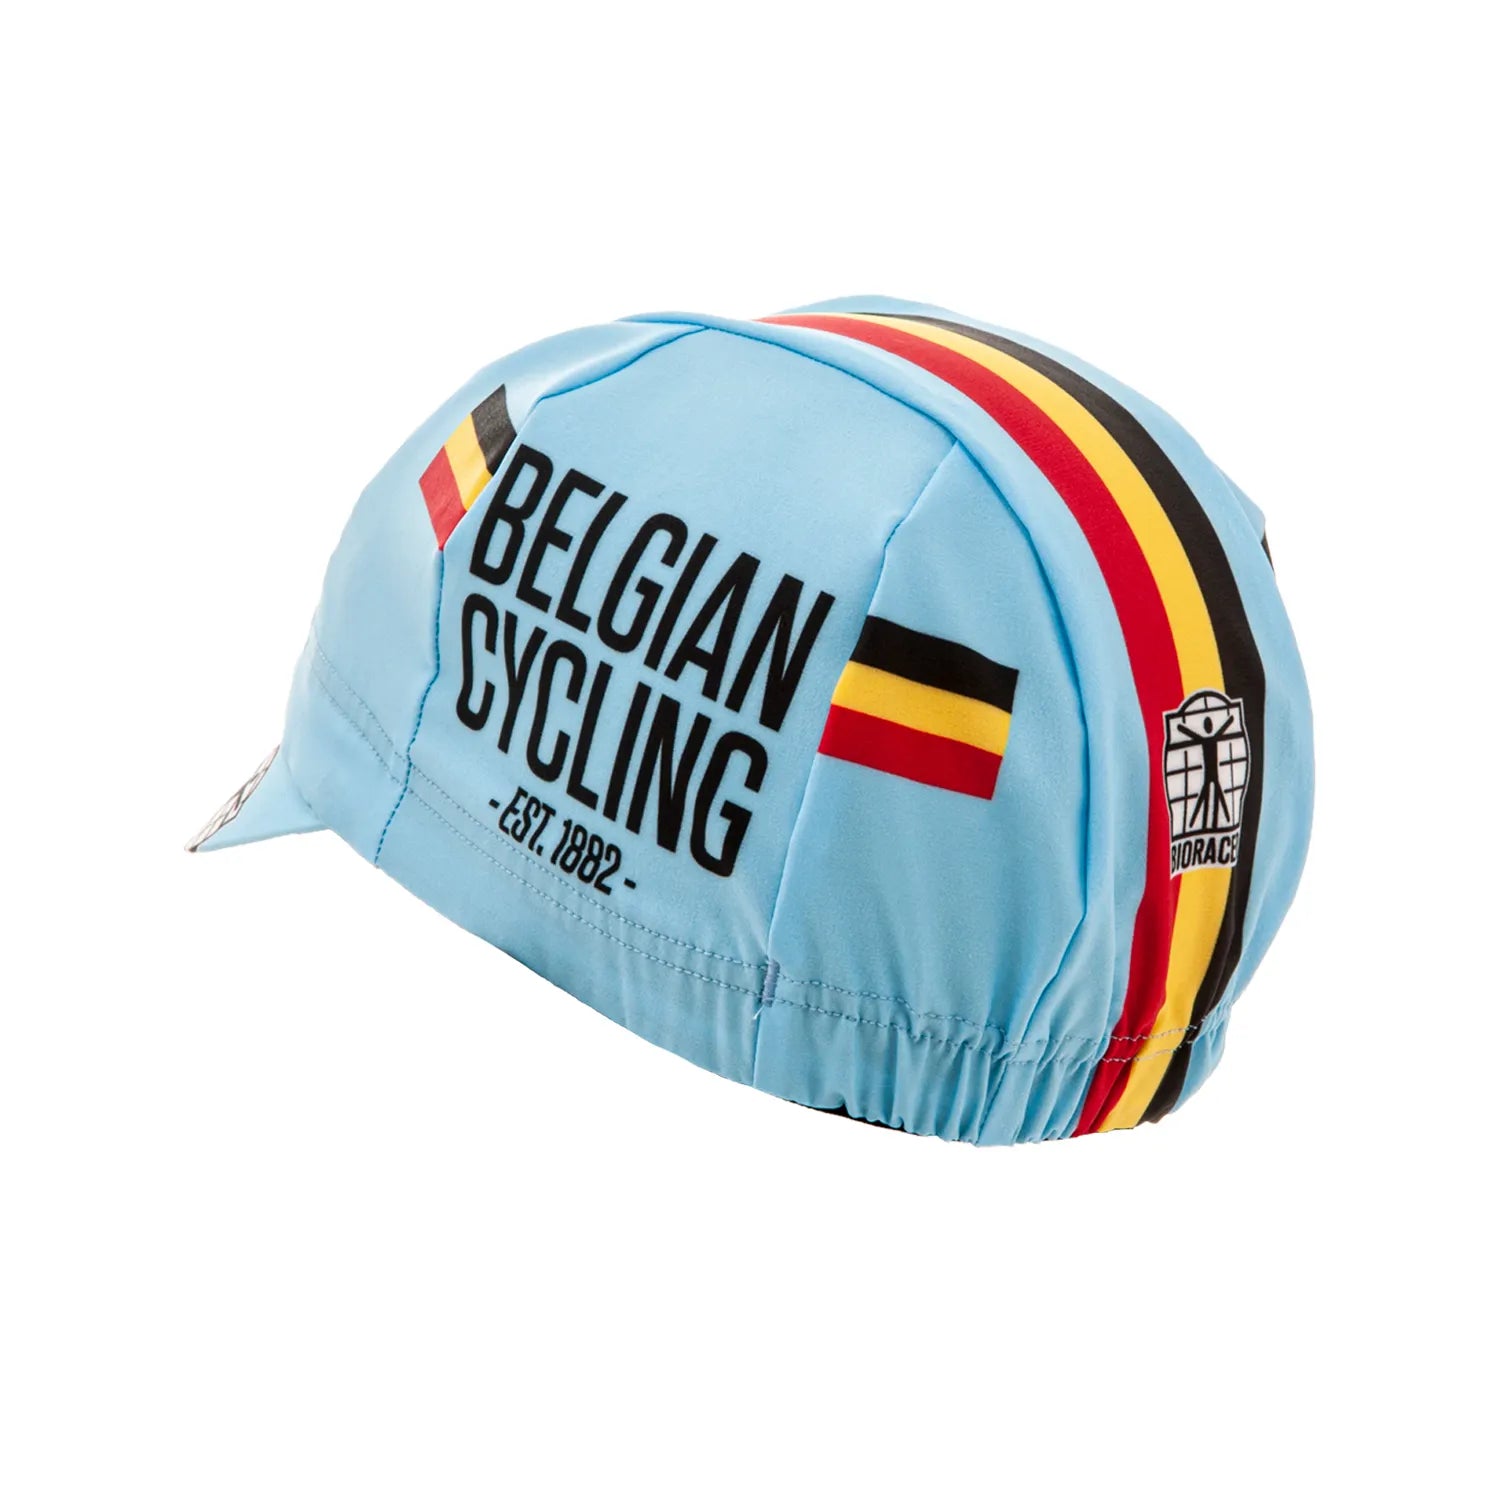 【受注限定商品】OFFICIAL BELGIAN CYCLING CAP